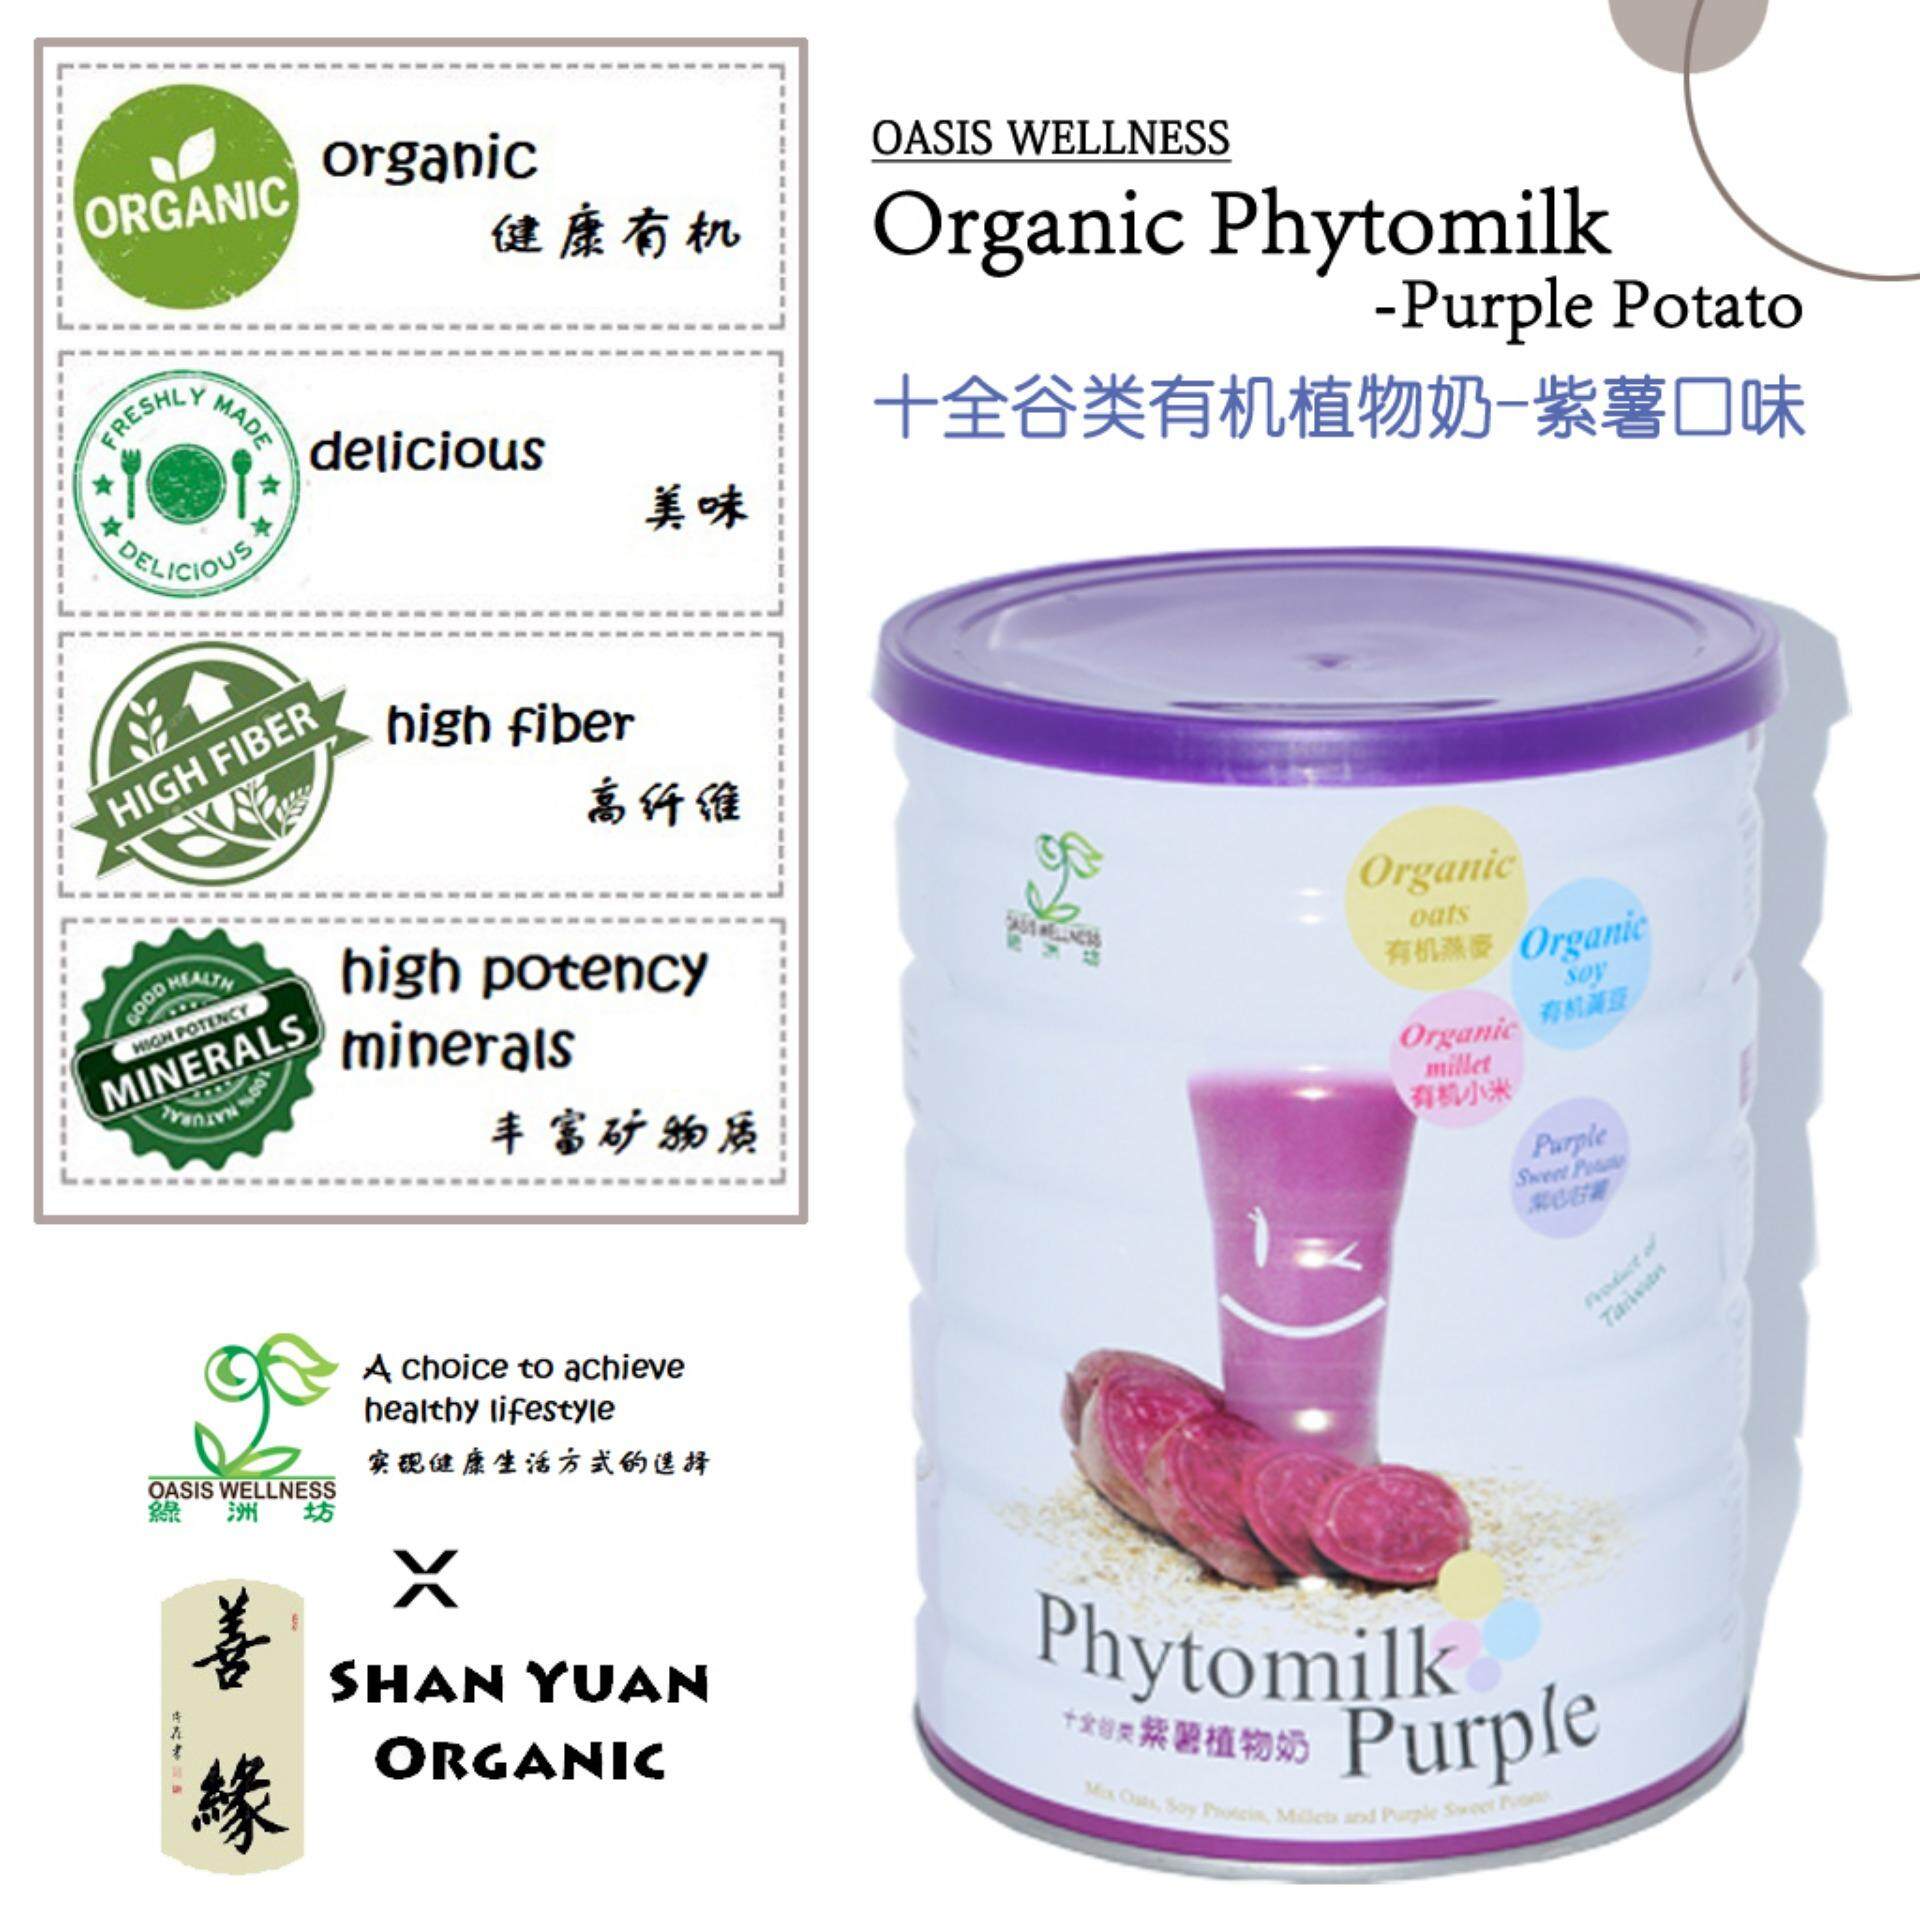 OASIS WELLNESS Organic Phytomilk-Purple Potato 十全谷类有机植物奶-紫薯口味 - Drinks / Minuman [SHAN YUAN ORGANIC / 善缘有机]